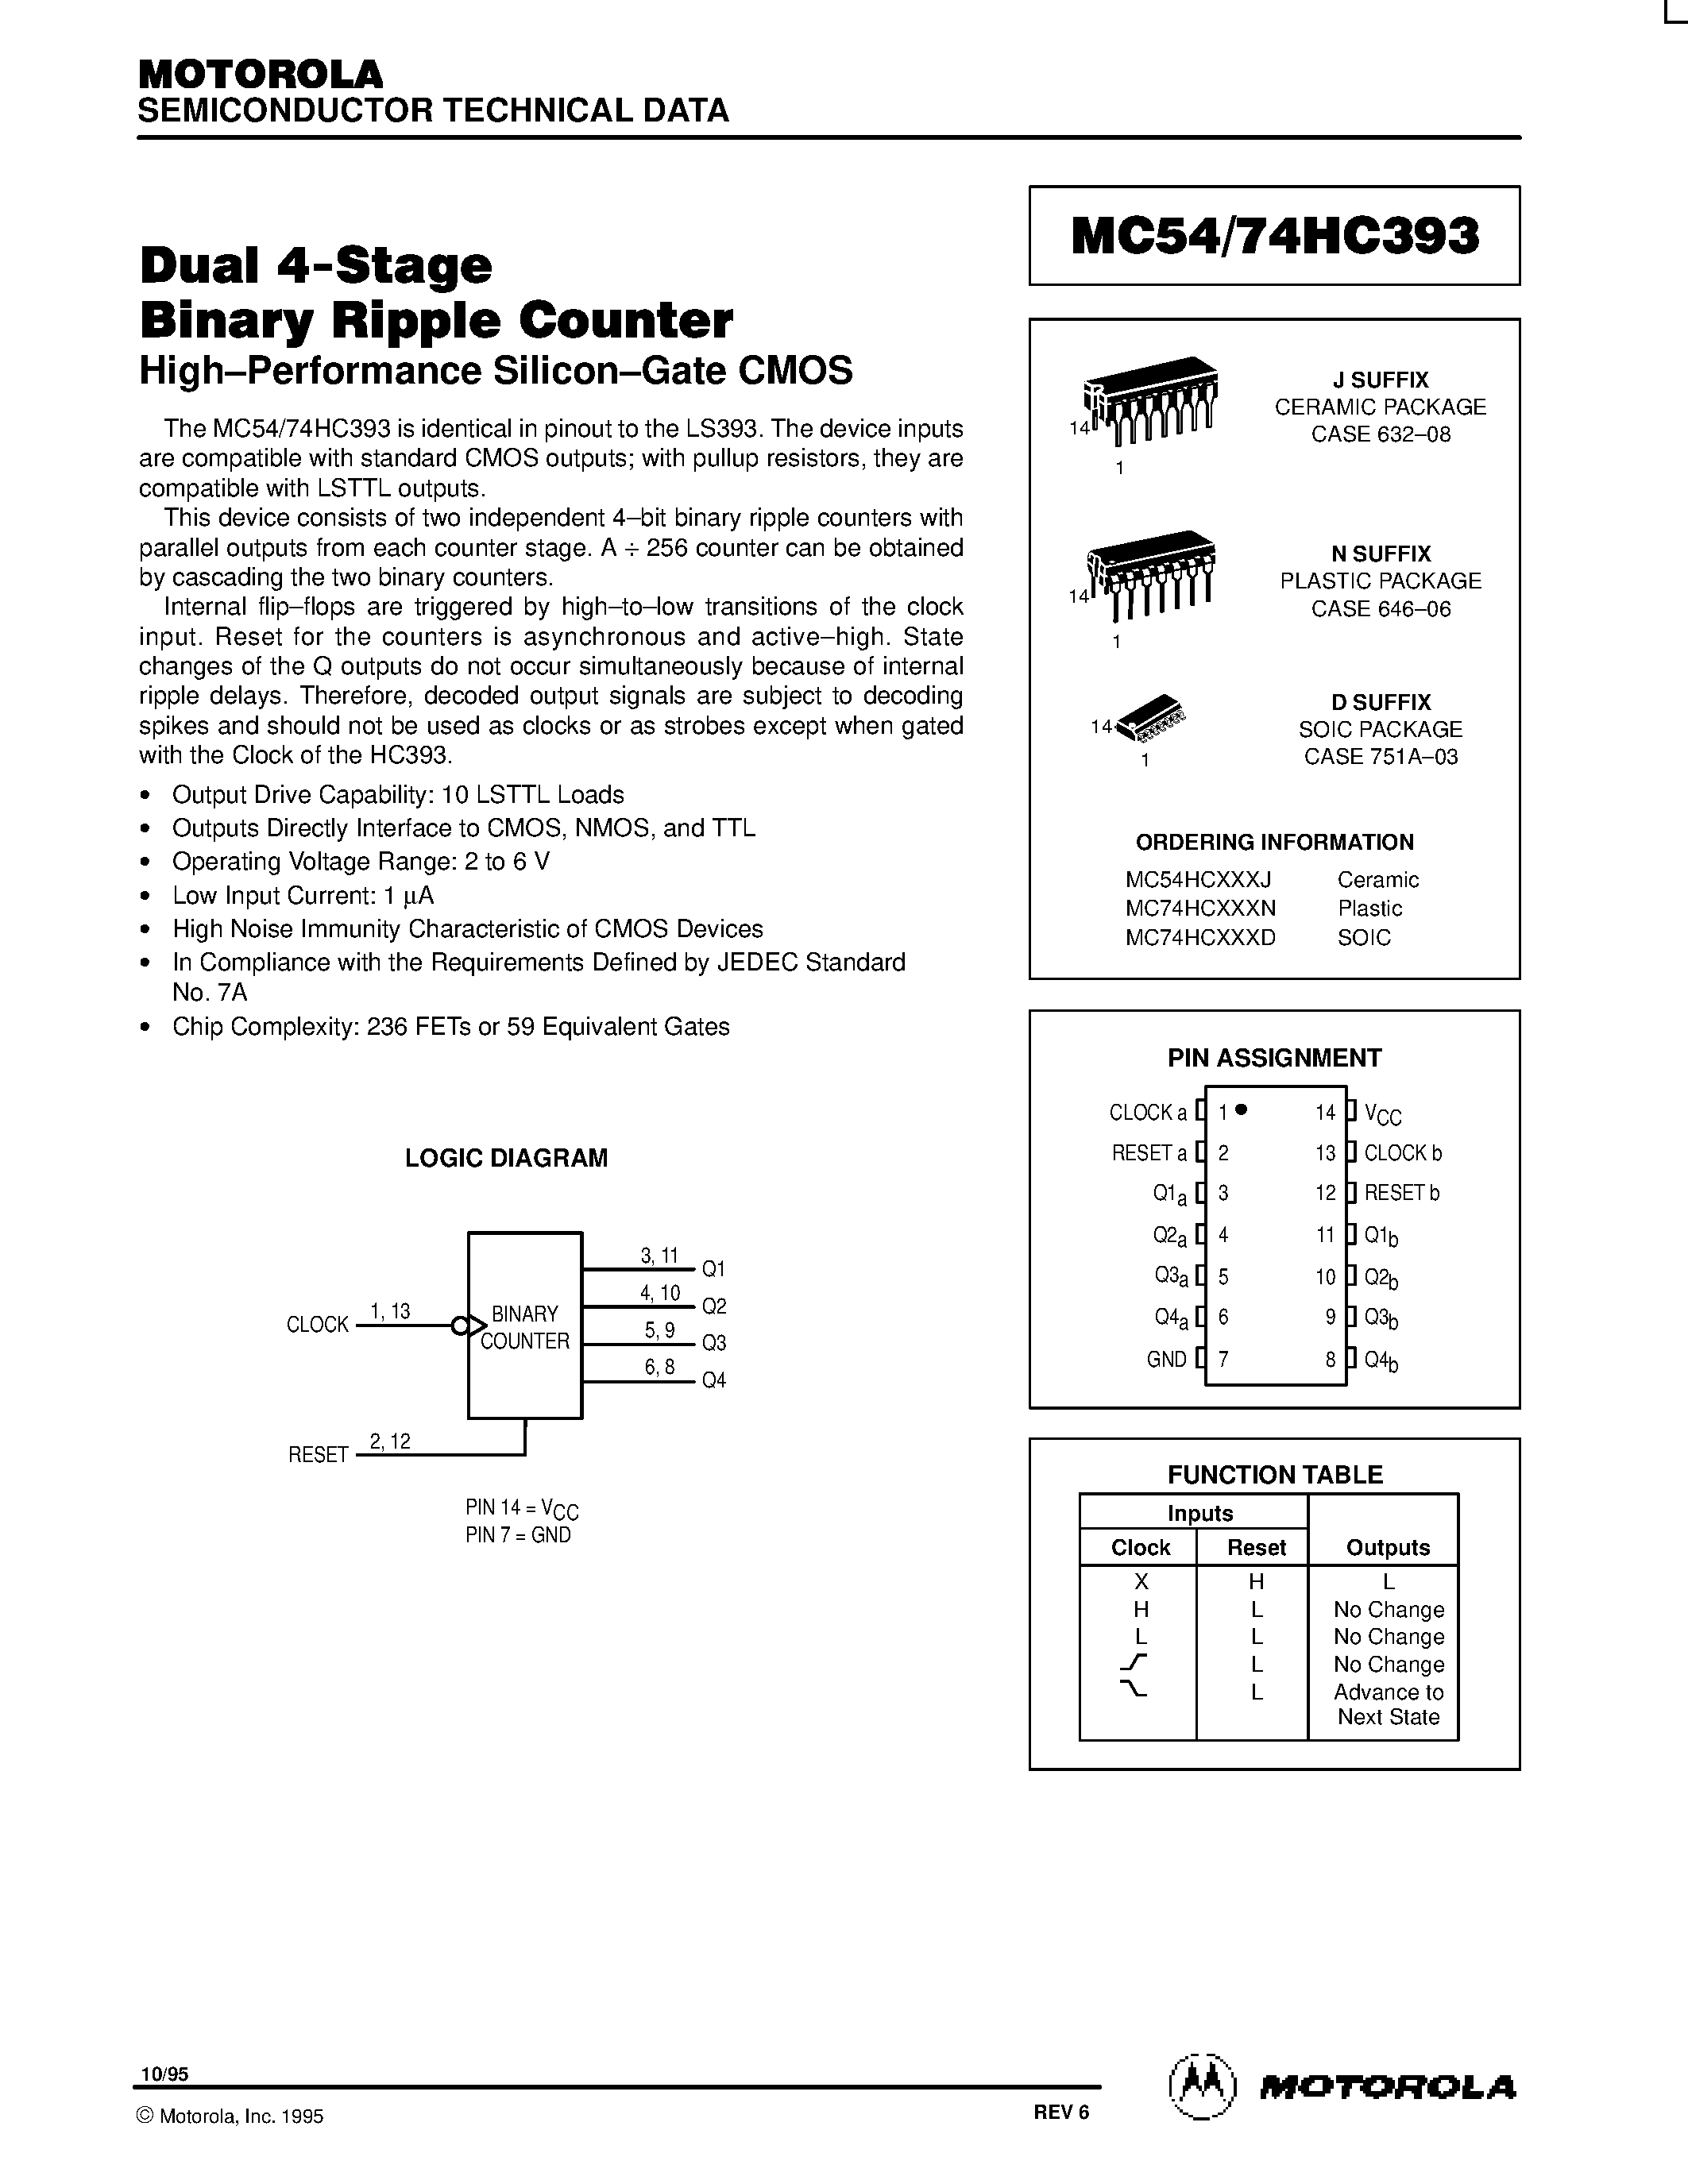 Datasheet MC84-74HC393 - Dual 4-Stage Binary Ripple Counter page 1